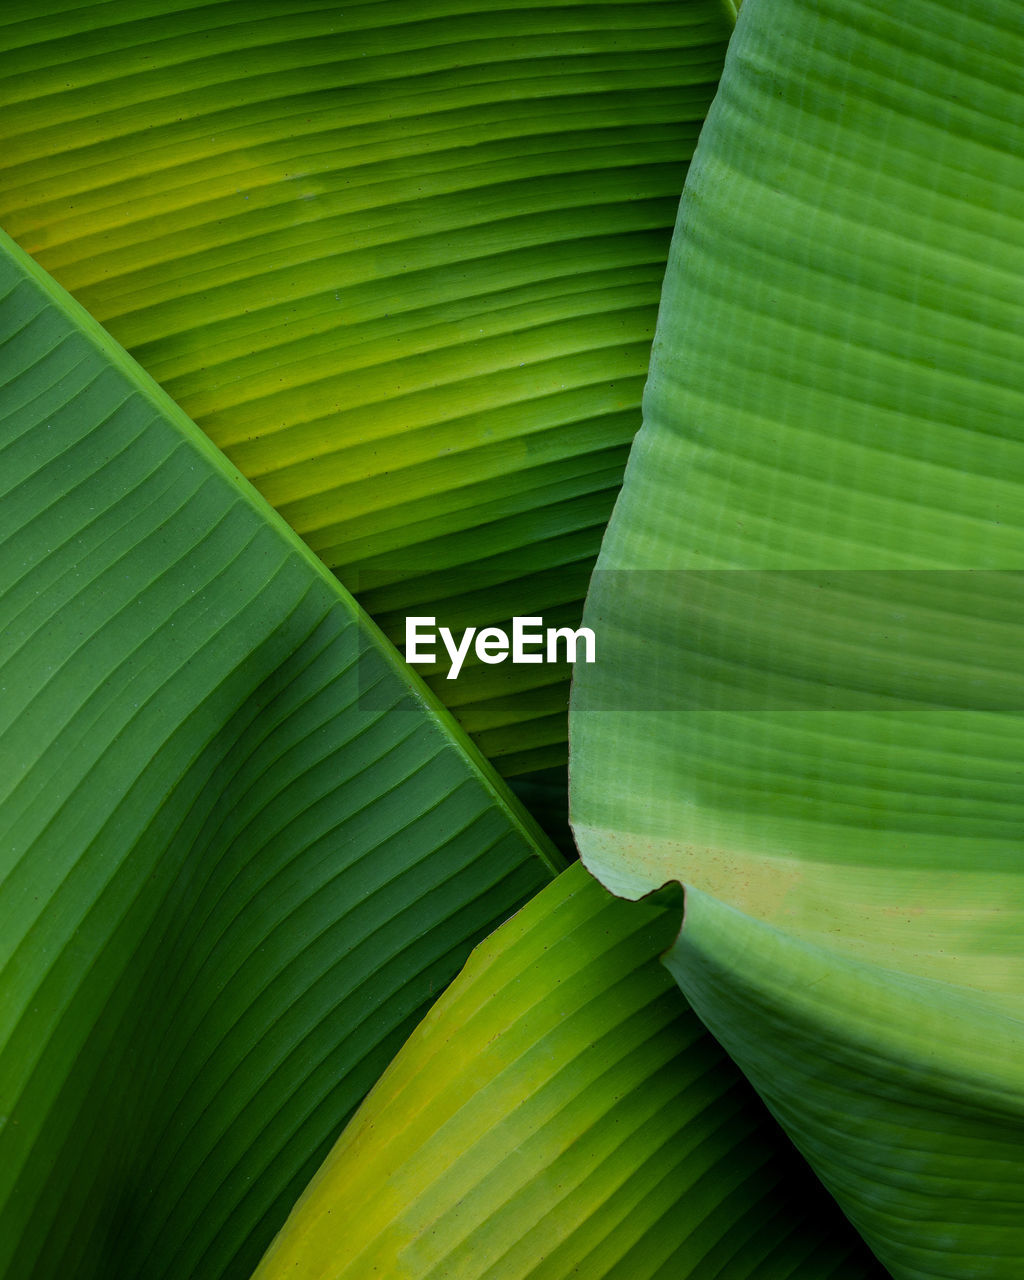 Closeup nature view of banana leaf background and dark tone